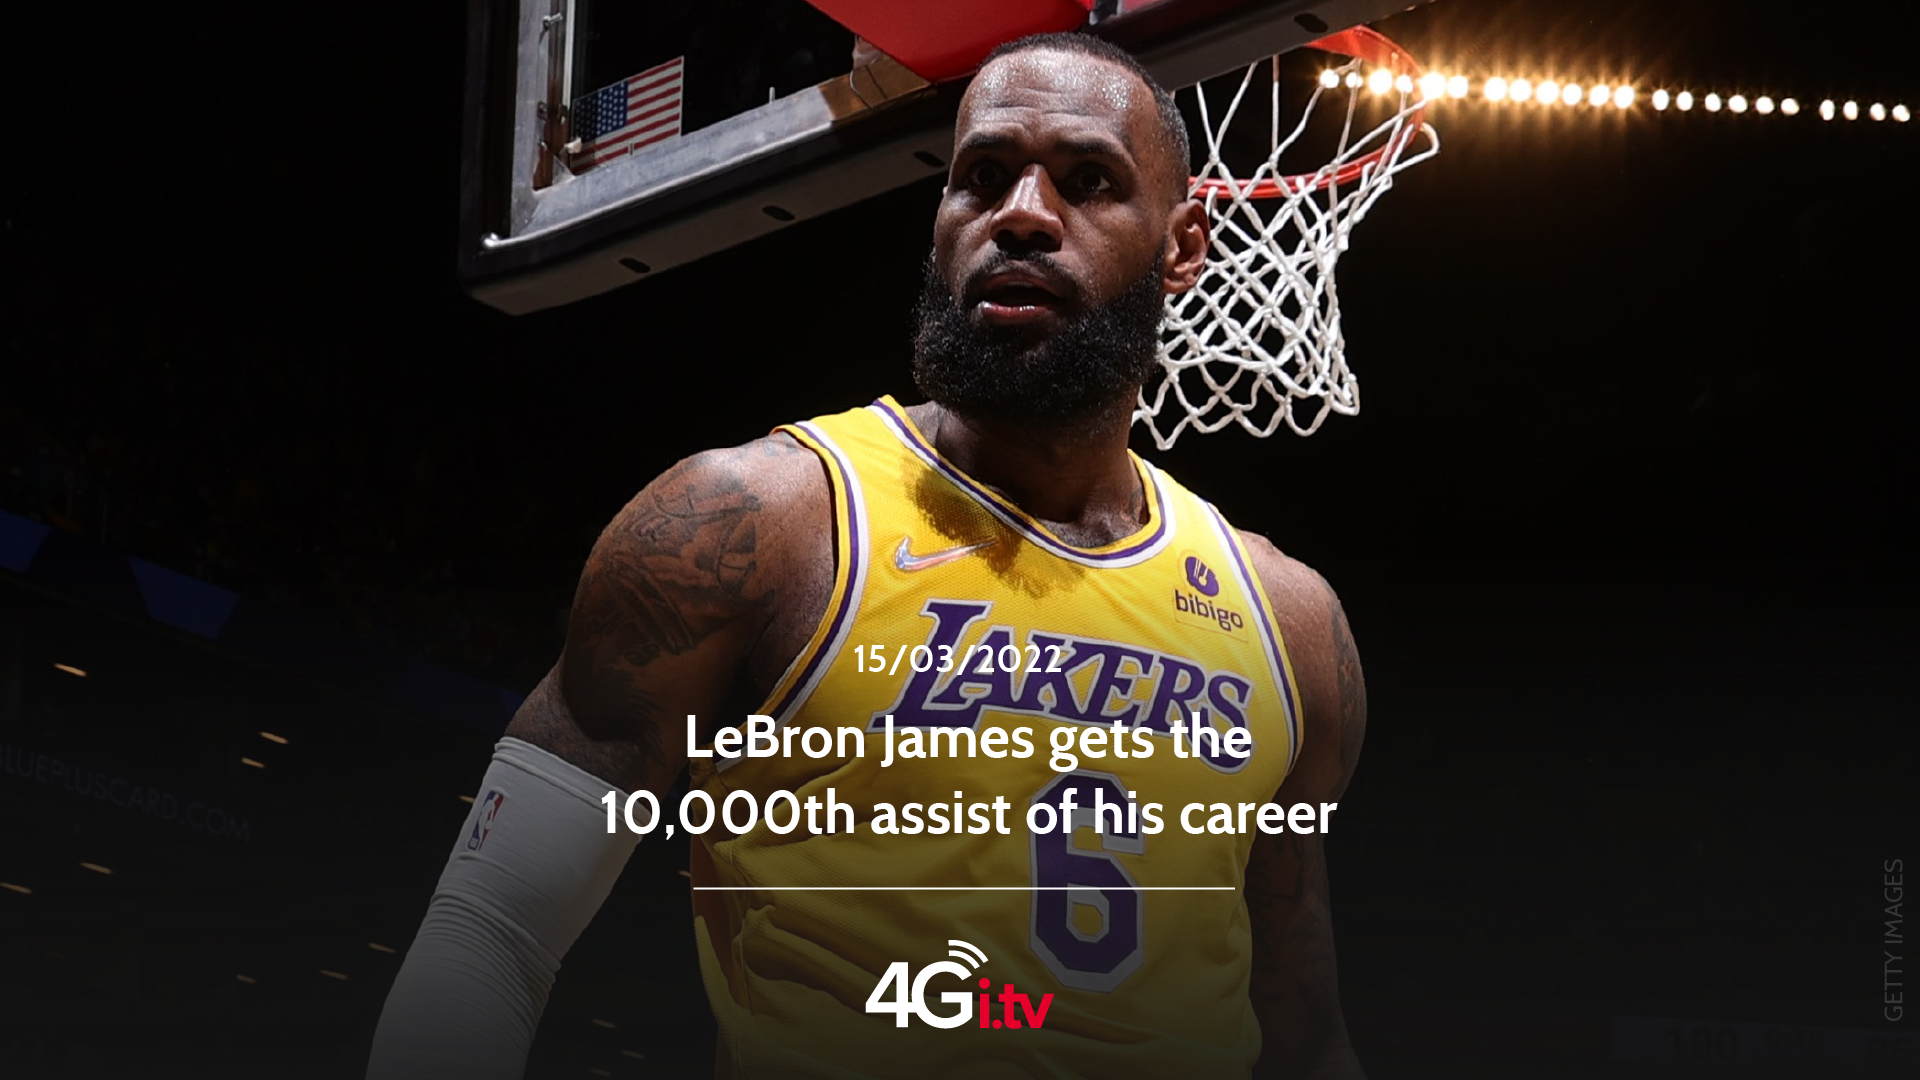 Lesen Sie mehr über den Artikel LeBron James gets the 10,000th assist of his career